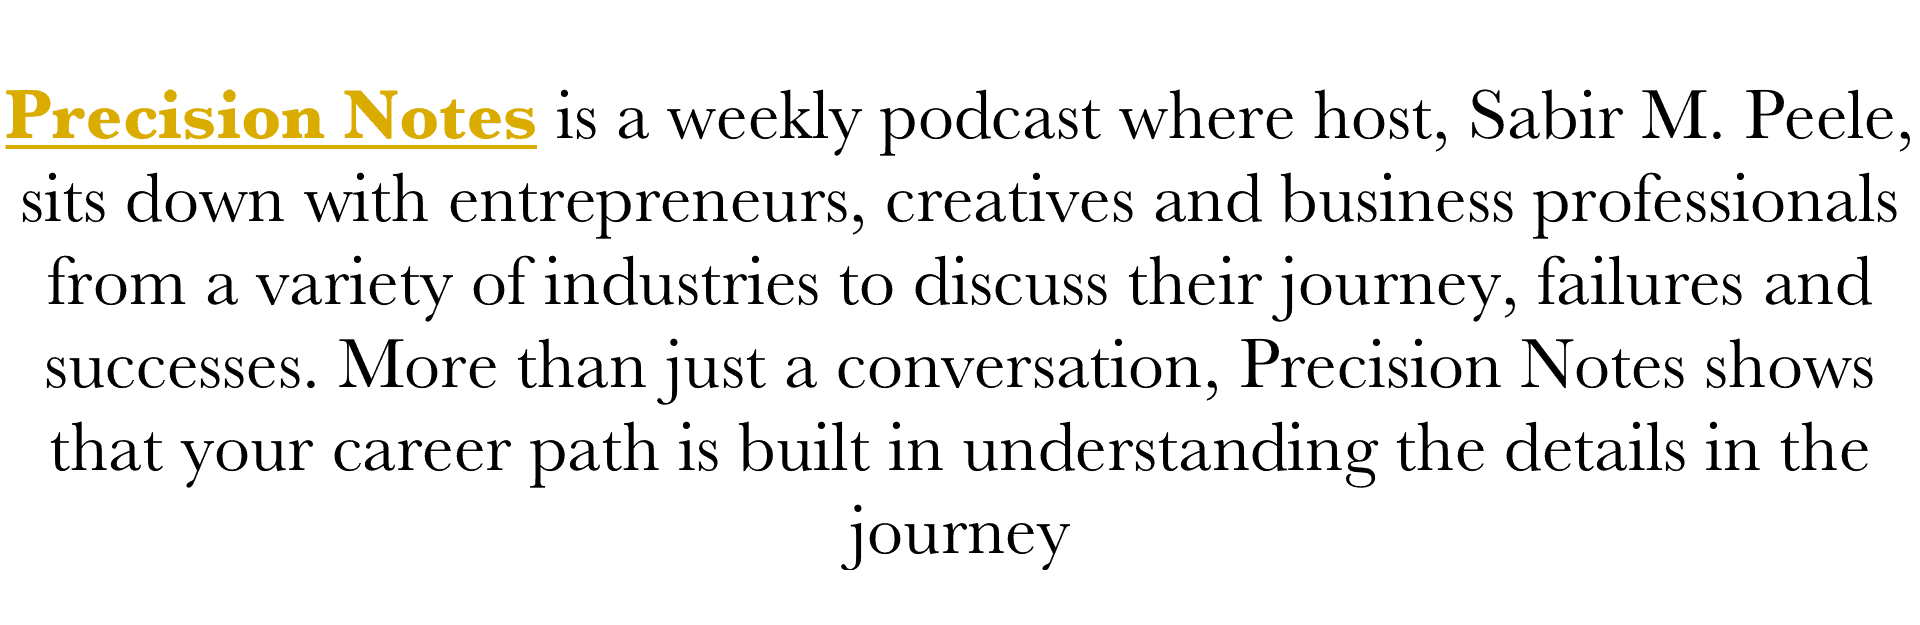 Precision Notes Podcast Description